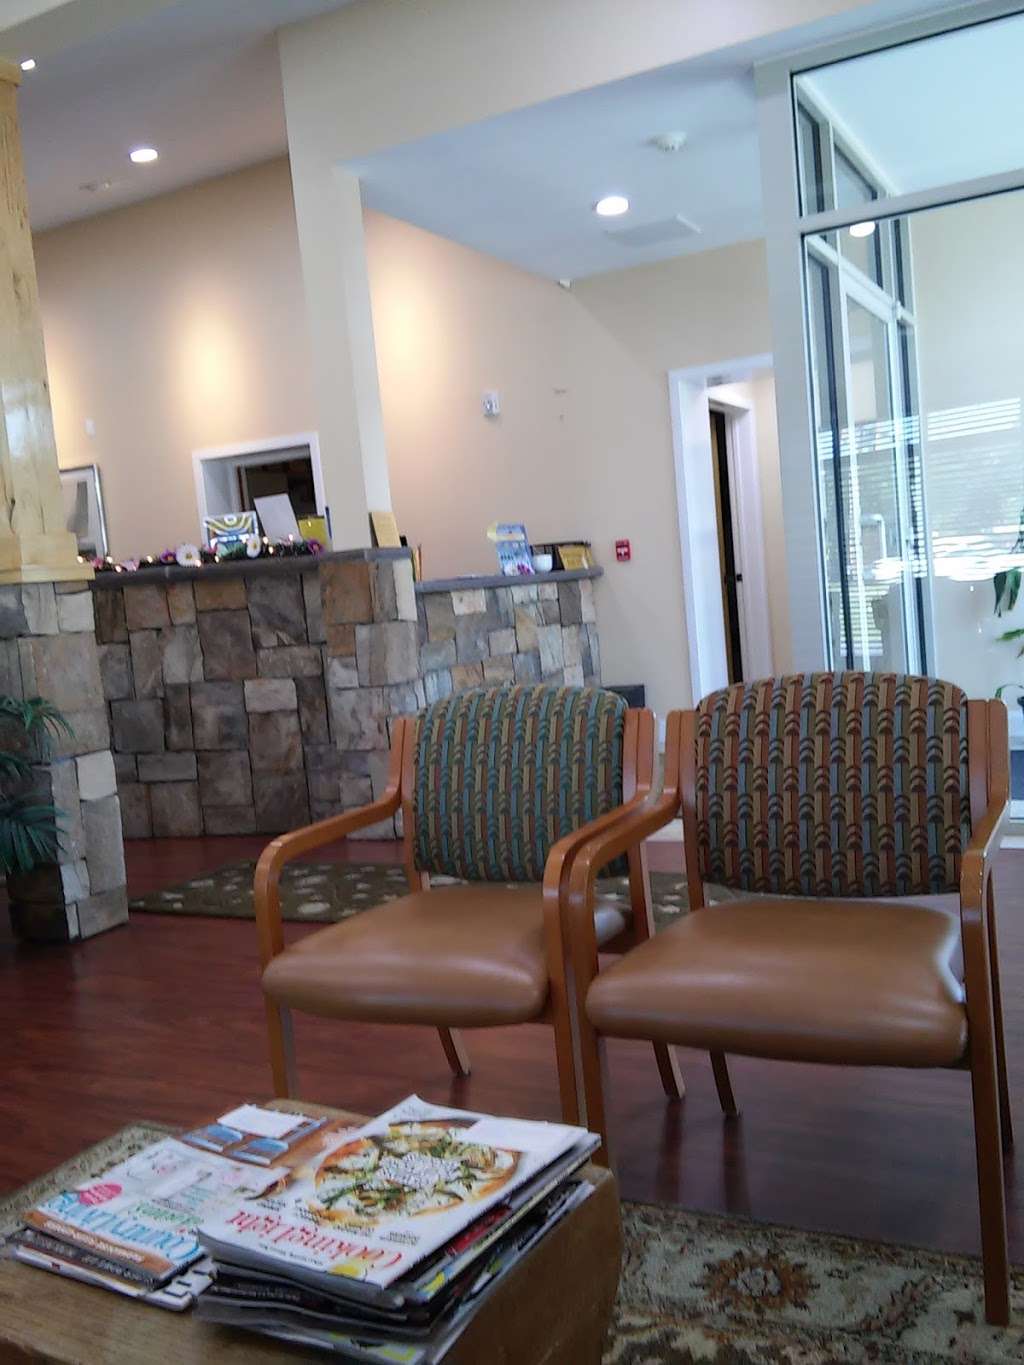 Peninsula Total Dental Care Center: Stewart Perim, DDS | 1505 S Salisbury Blvd, Salisbury, MD 21801 | Phone: (410) 742-8686